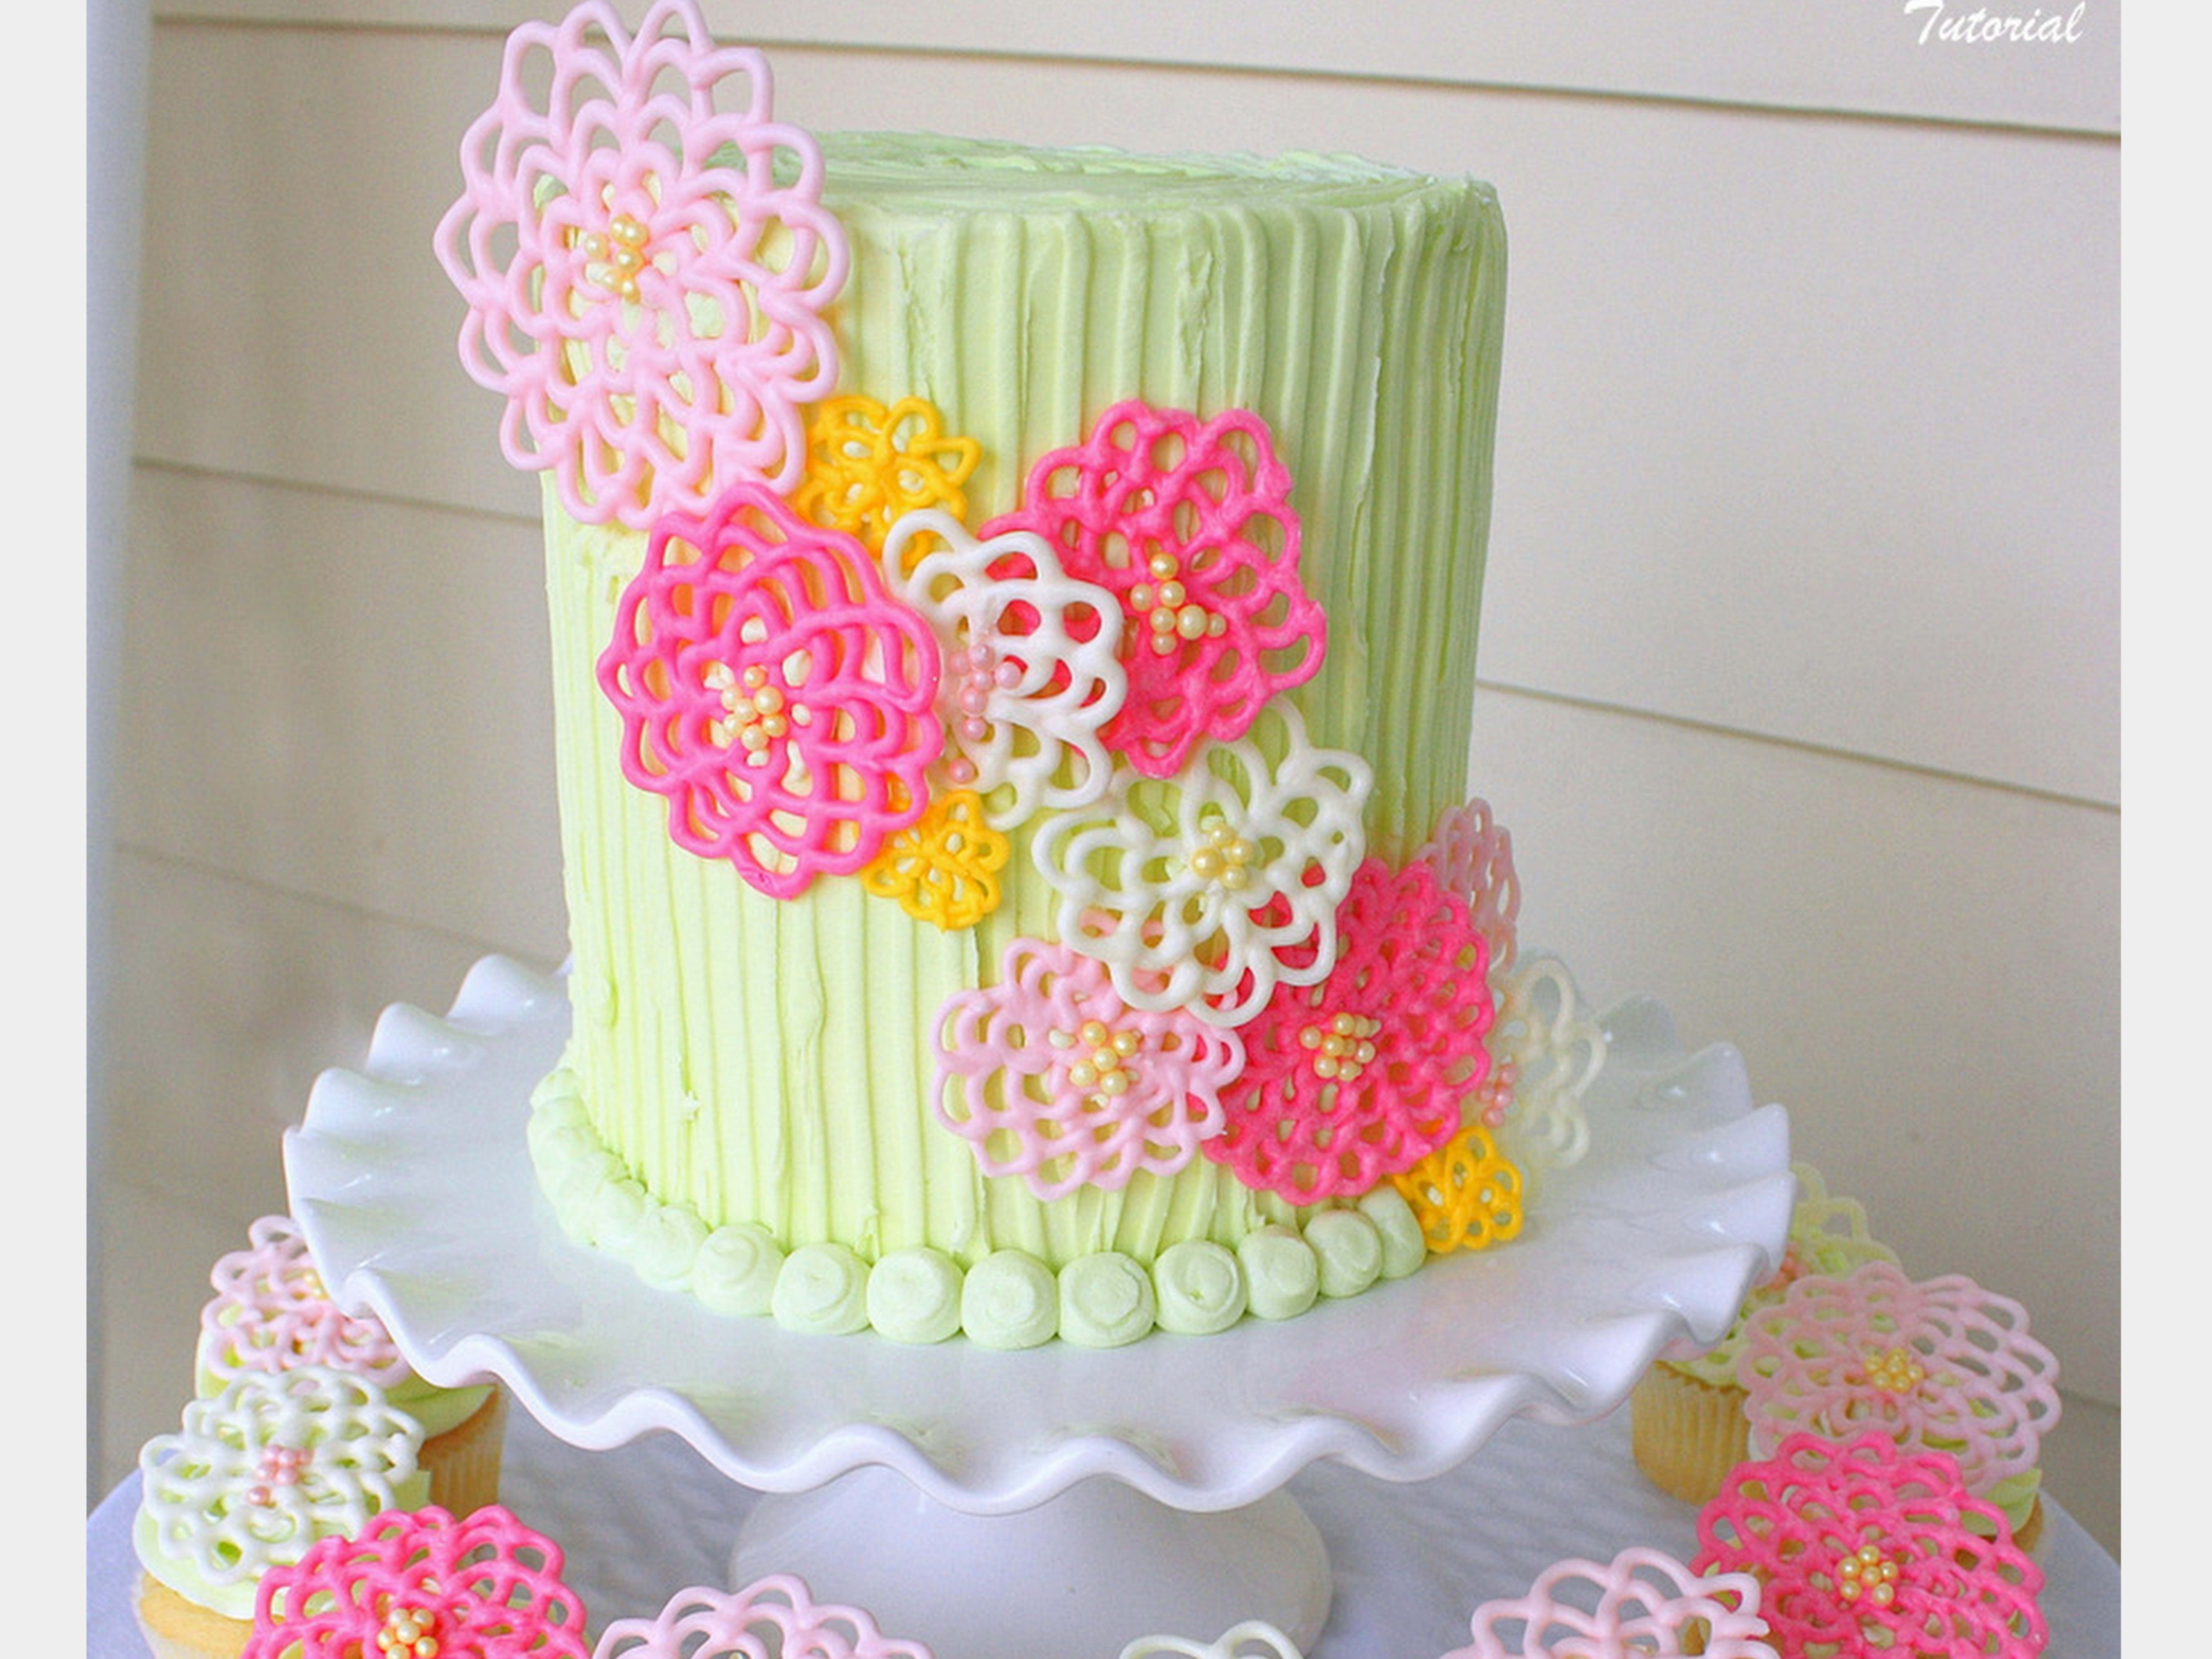 Springtime Flowers in Chocolate!~ A Cake Decorating Blog Tutorial ...